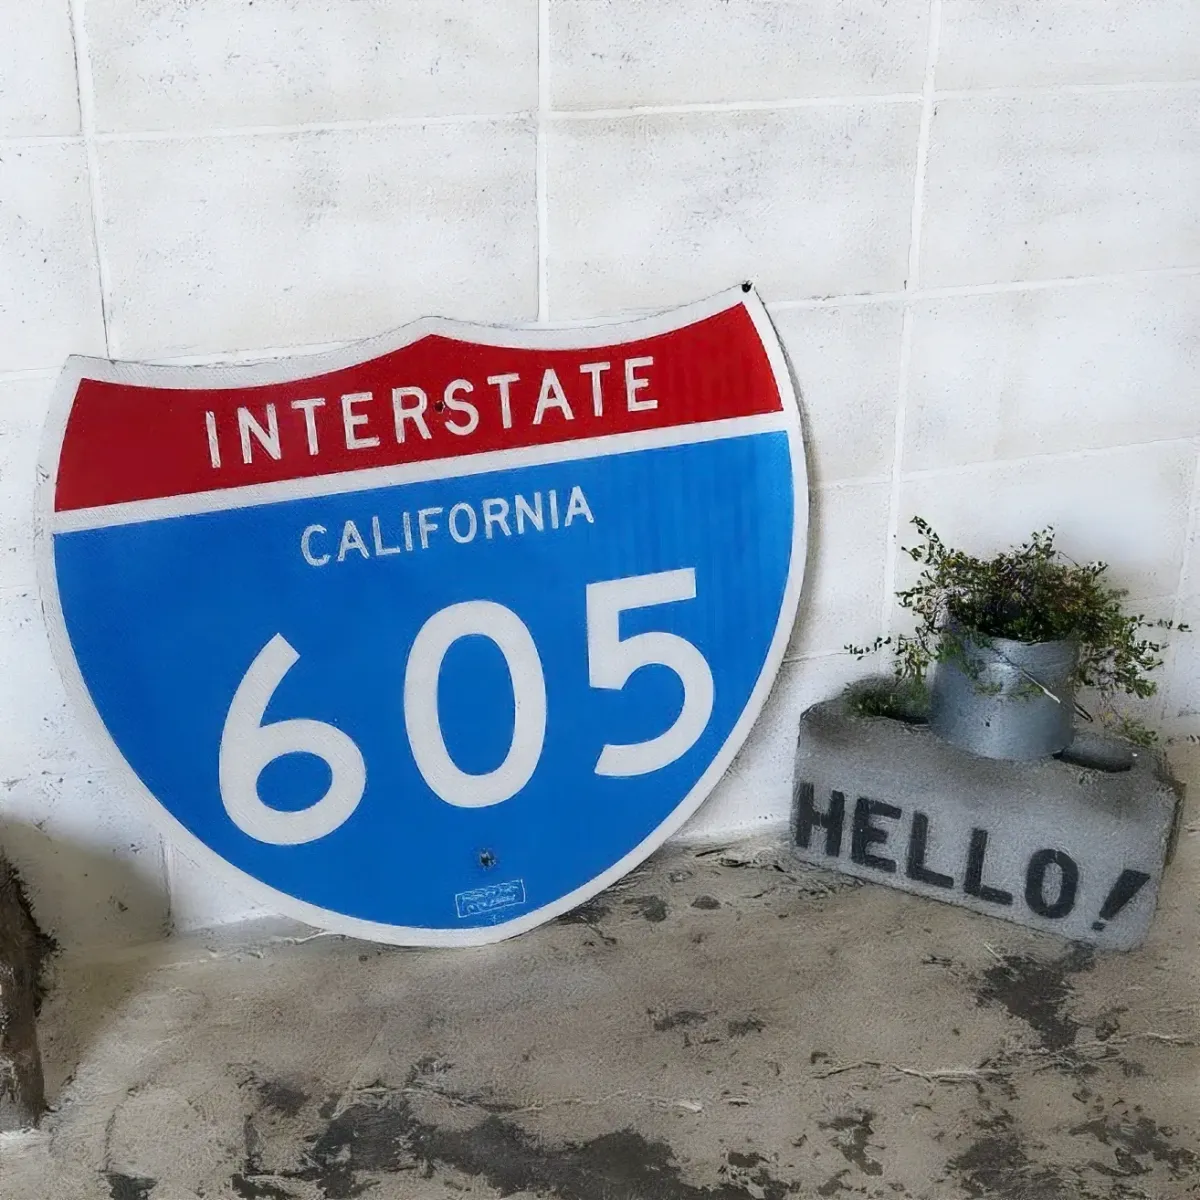 INTERSTATE CALIFORNIA 605 ロードサイン